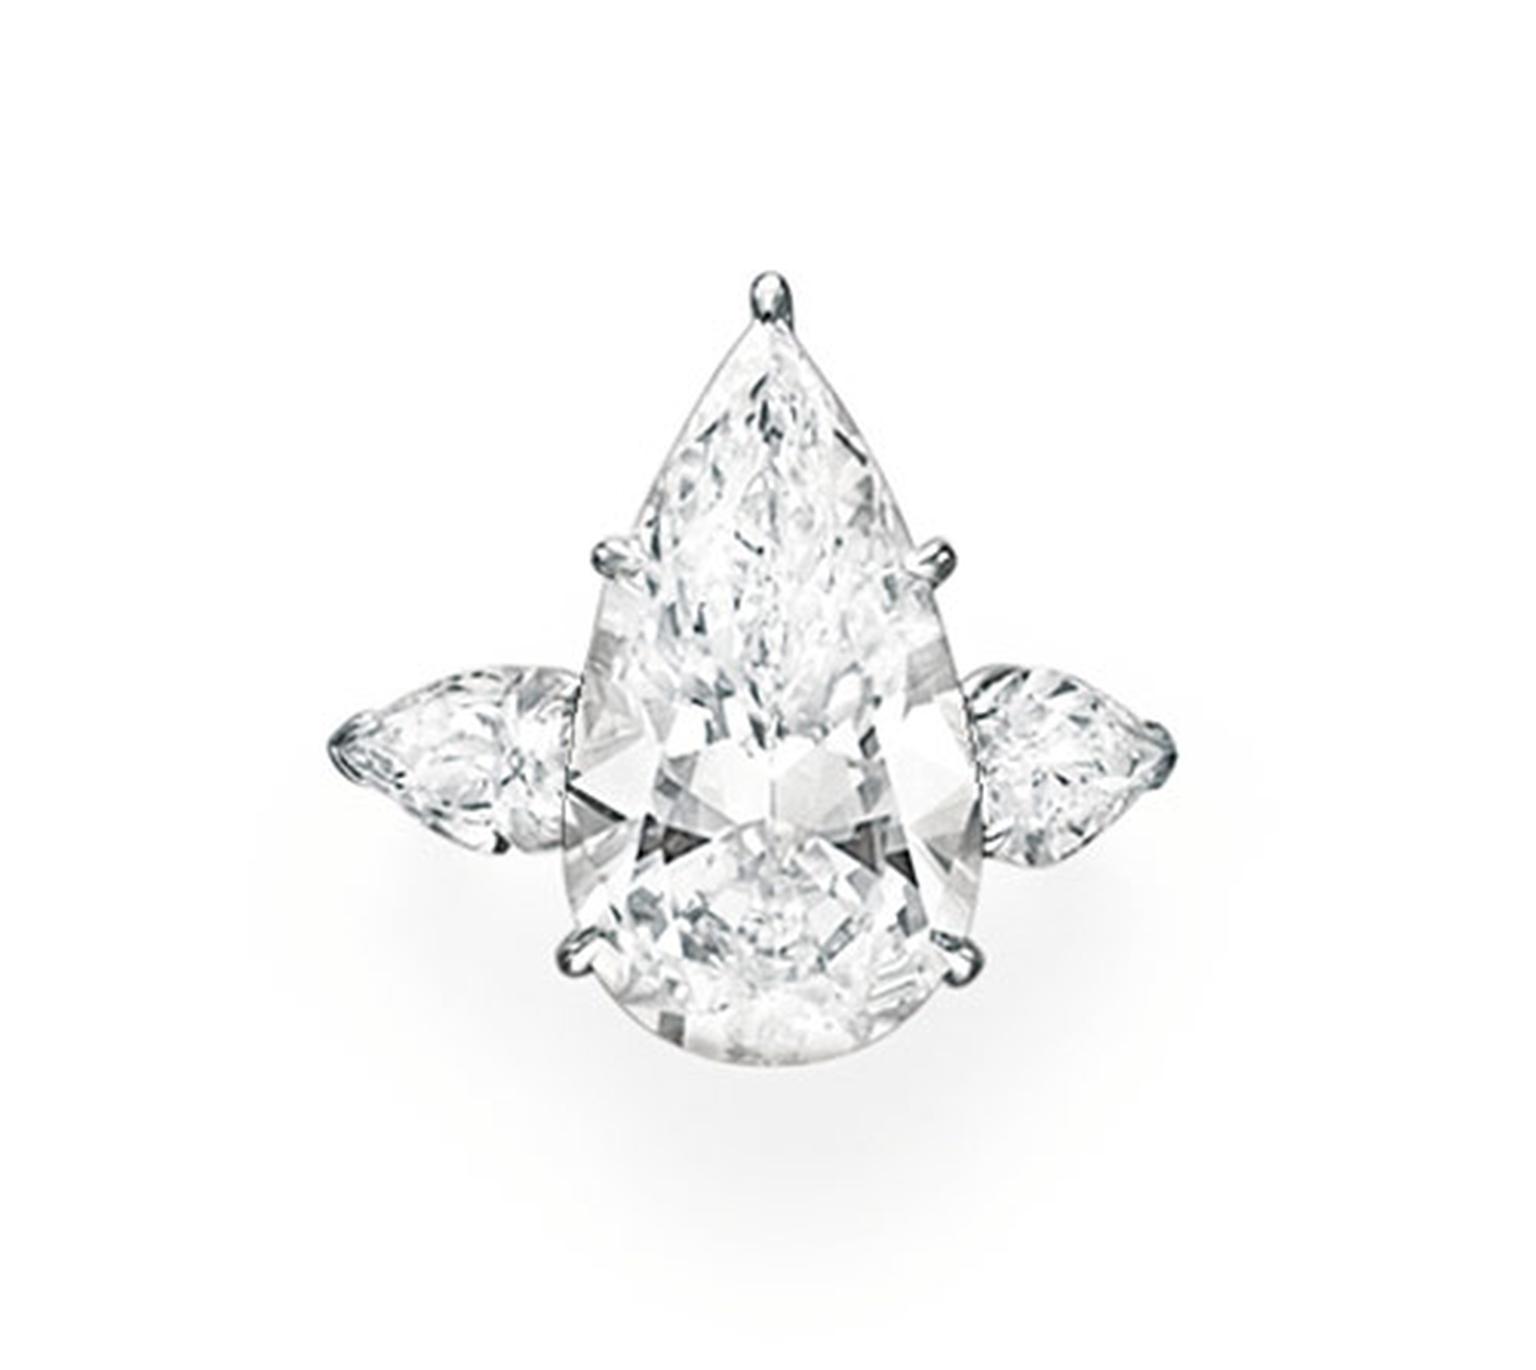 Christies-Pear-Shaped-Diamond-Ring.jpg